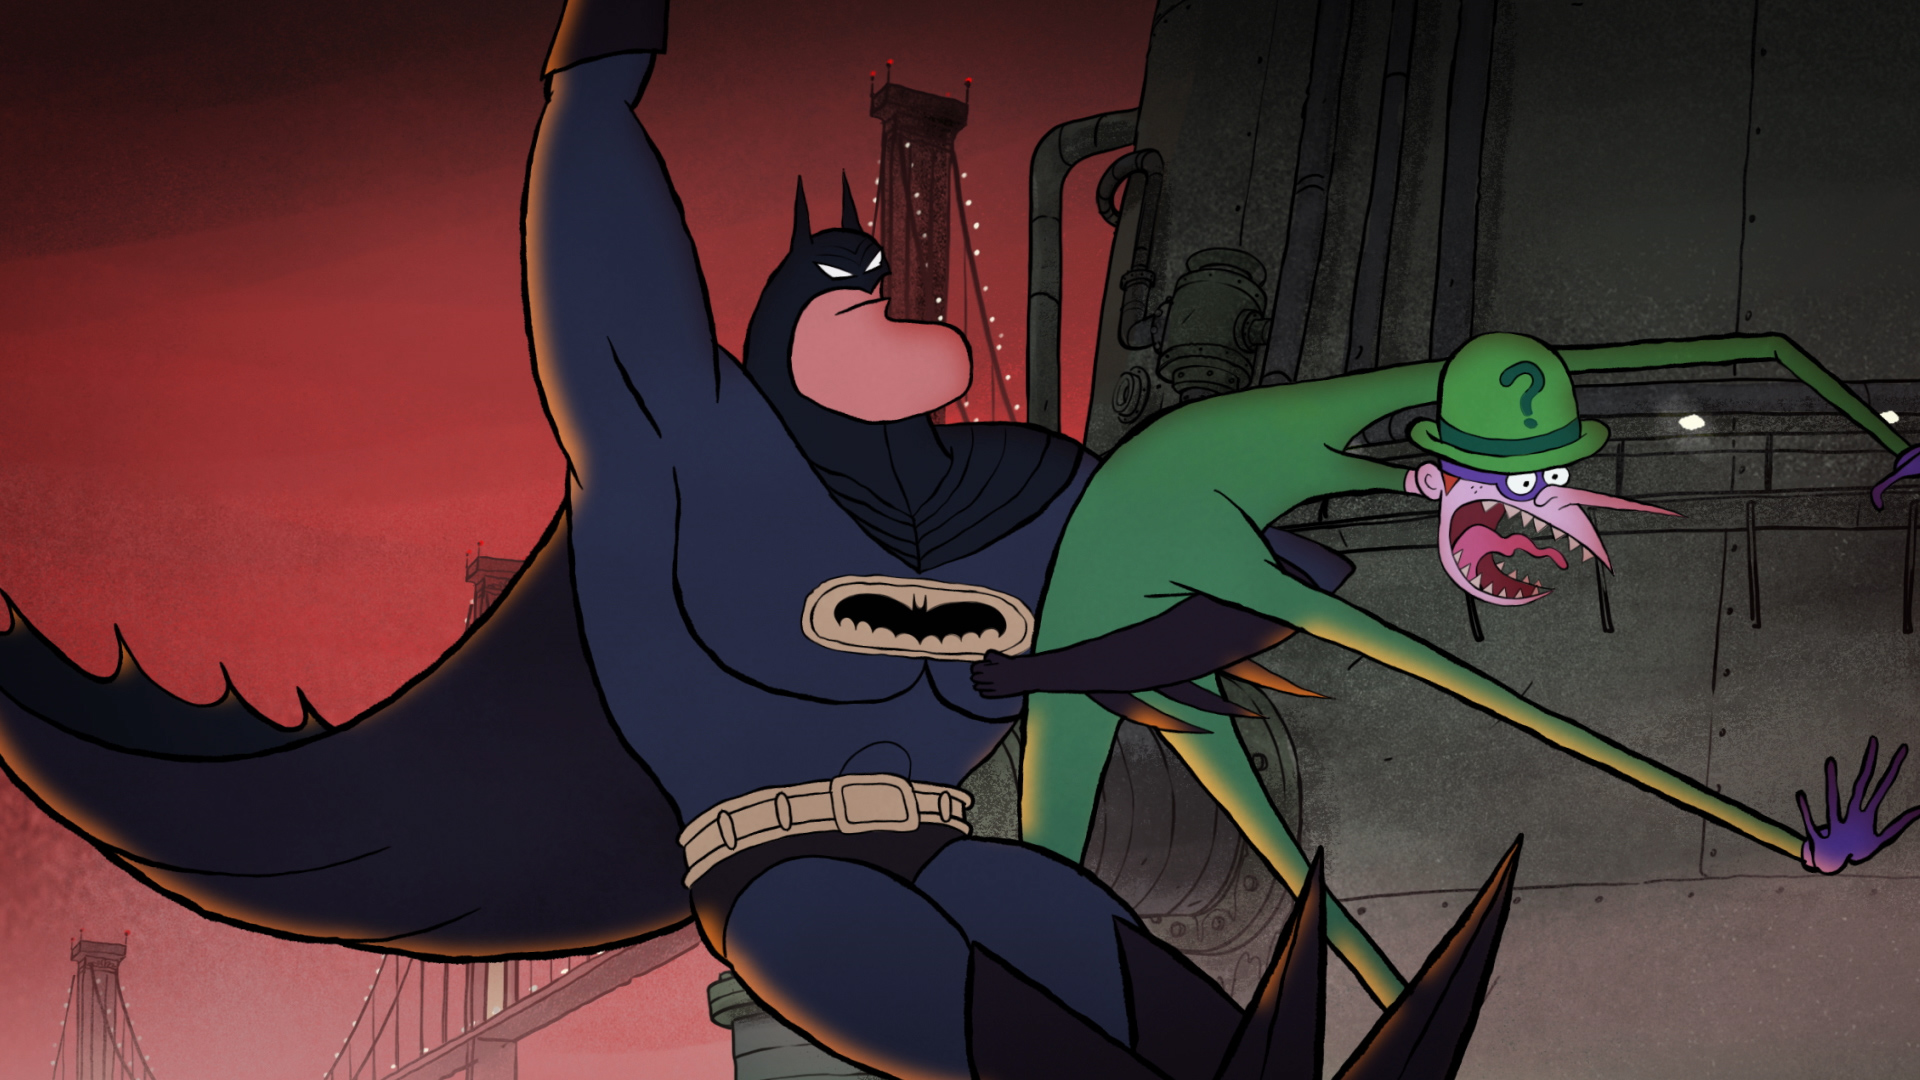 Luke Wilson as Batman in Mike Roth's animated superhero comedy film, Merry Little Batman